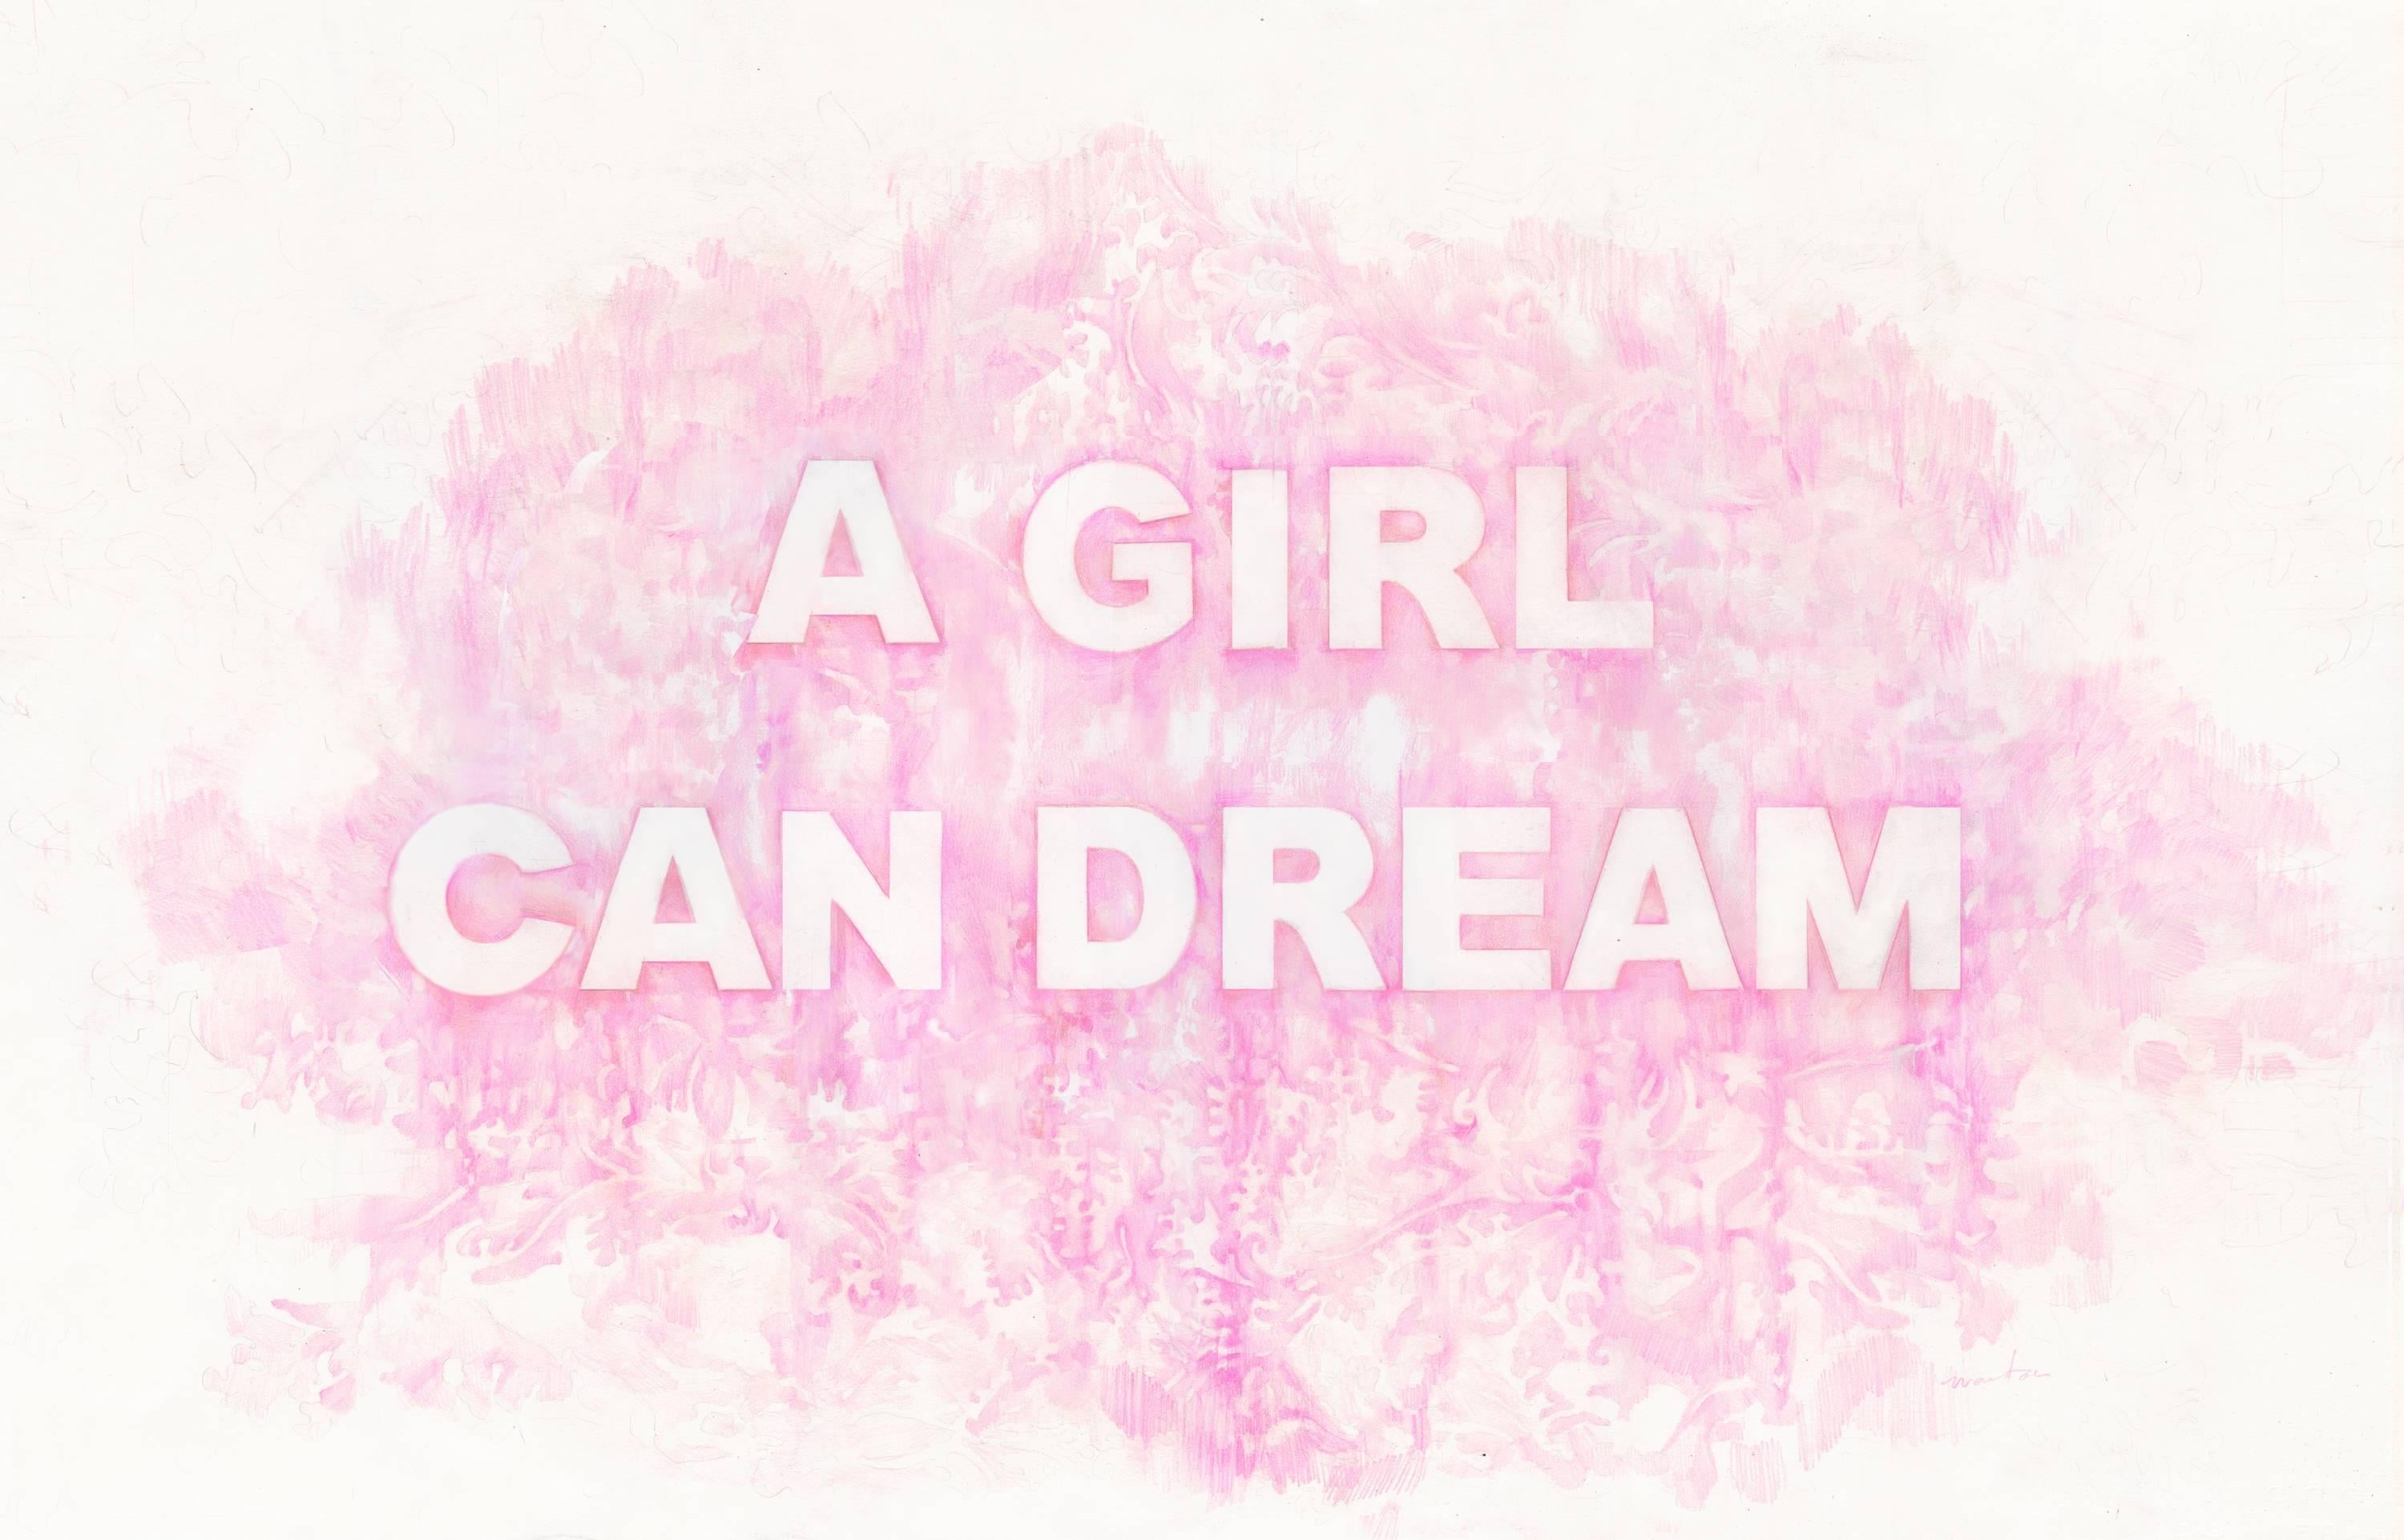 A Girl Can Dream  - Painting by Amanda Manitach